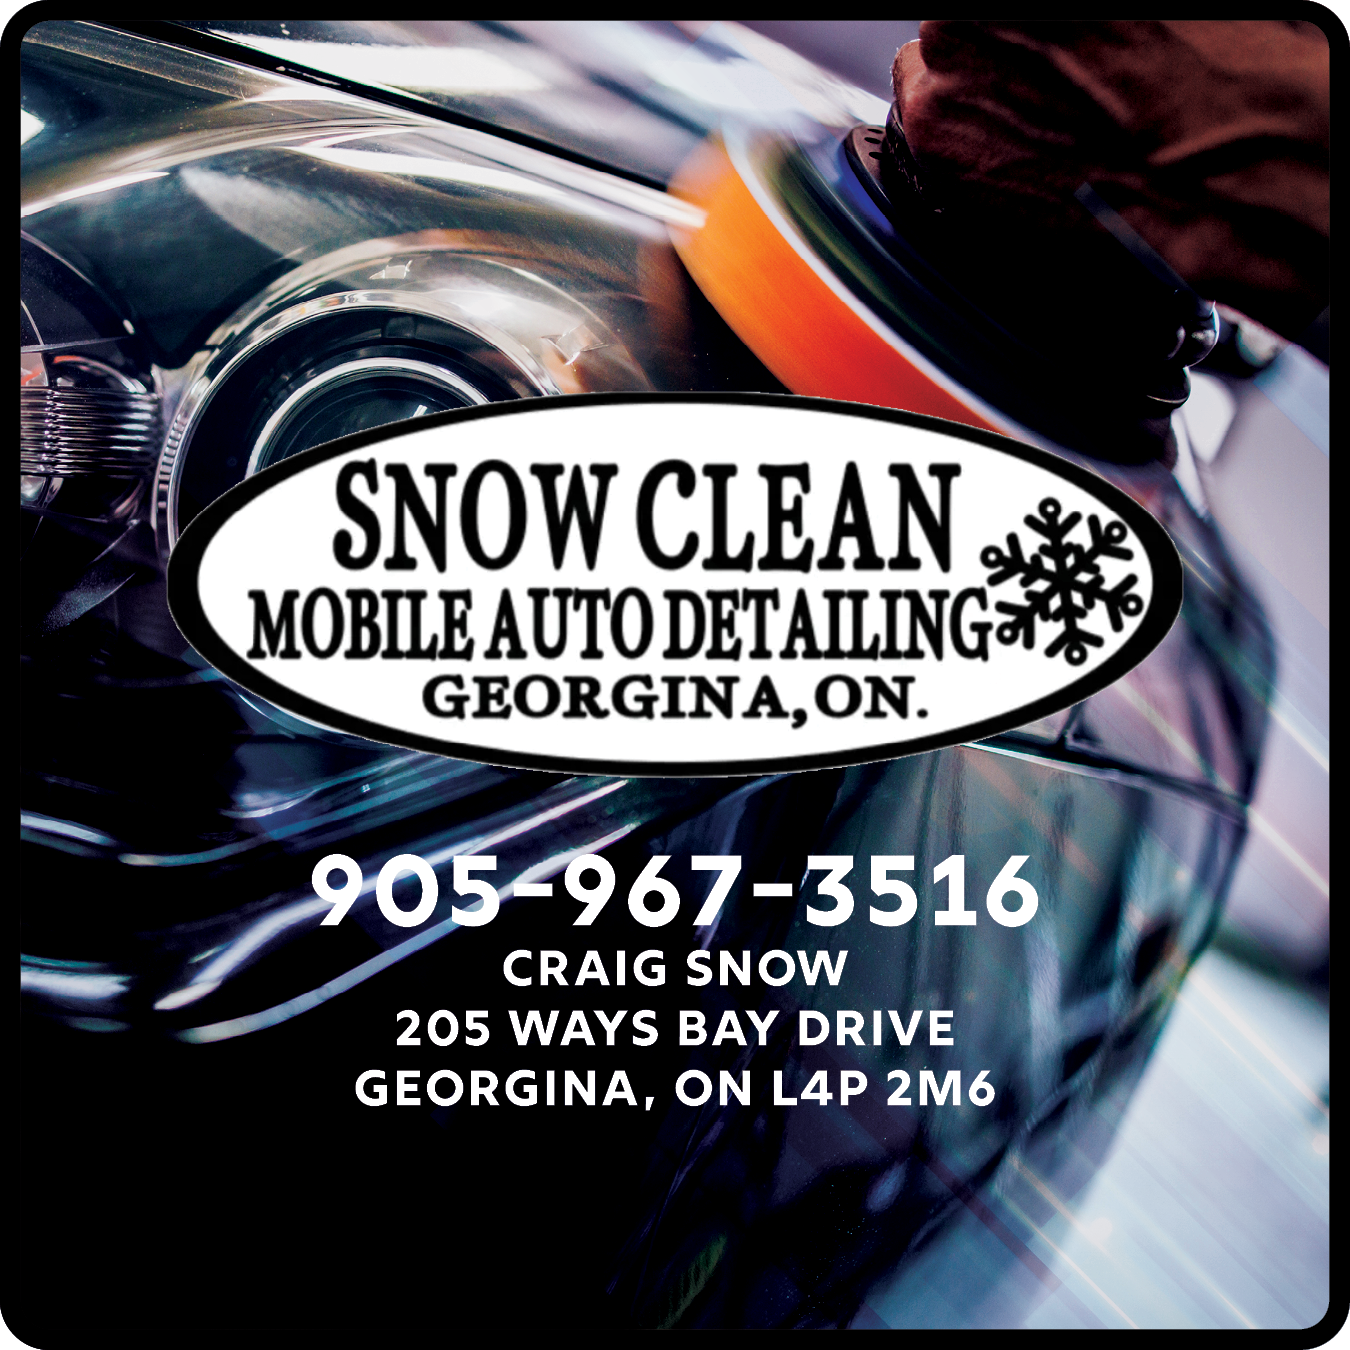 Snow Clean Mobile Auto Detailing